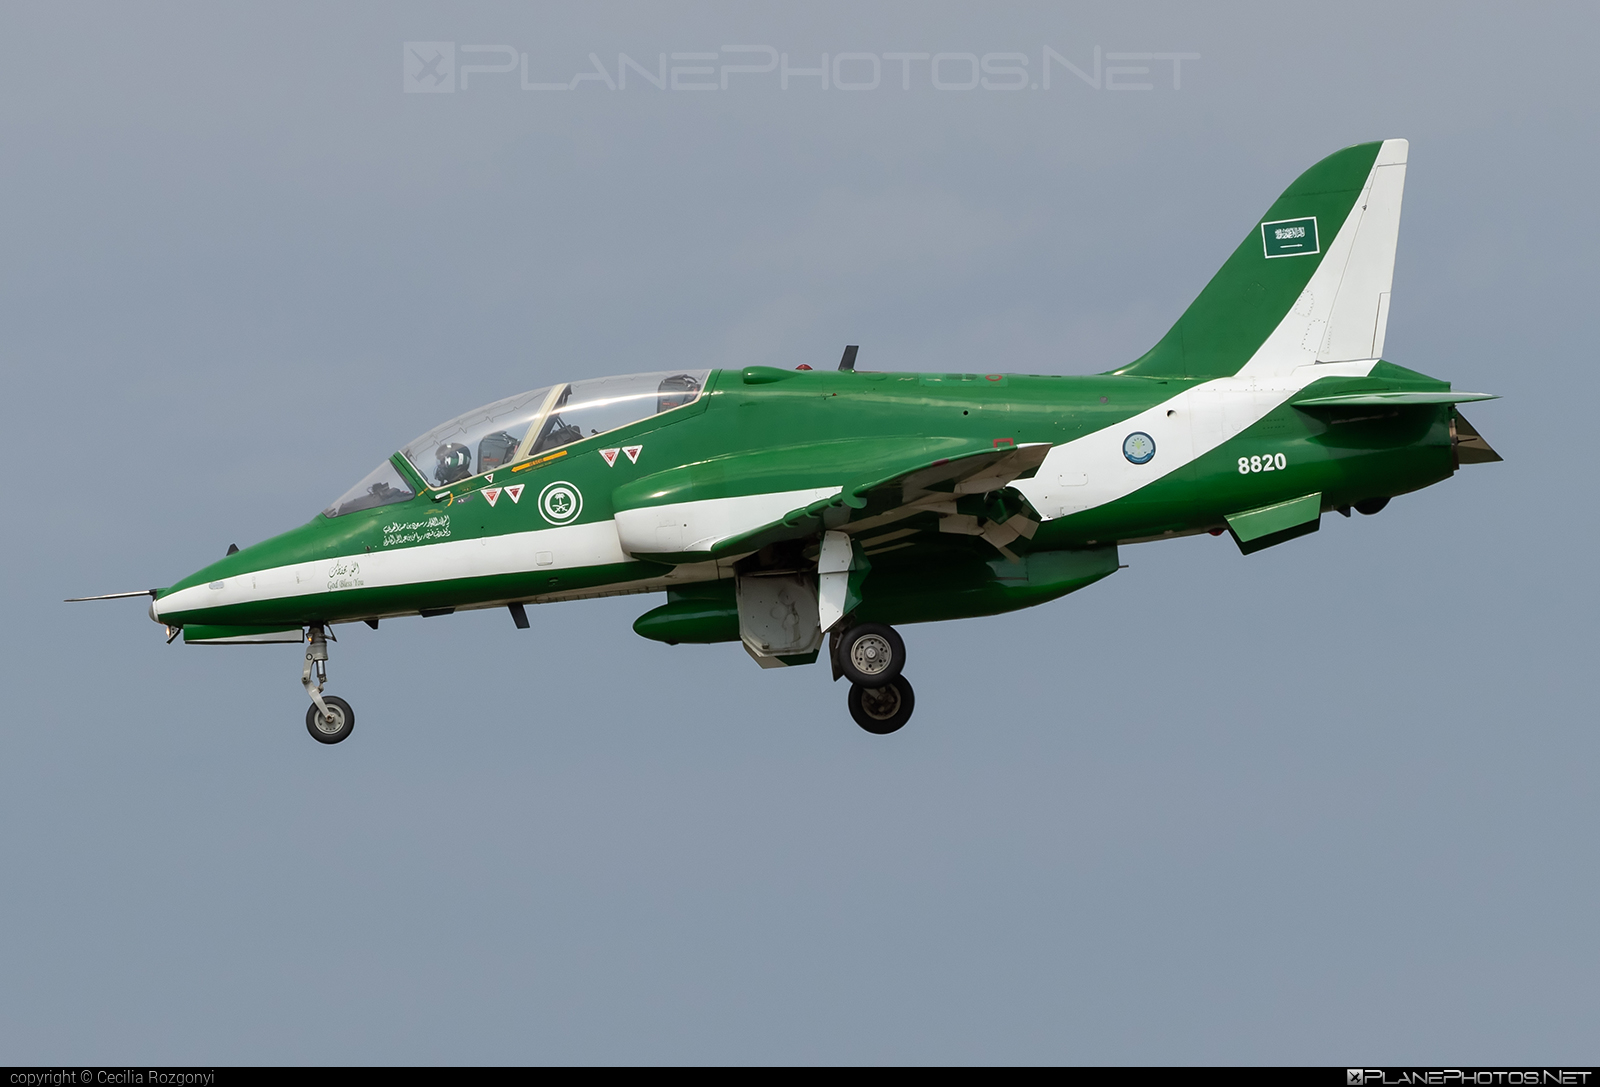 British Aerospace Hawk 65A - 8820 operated by Royal Saudi Air Force #RoyalSaudiAirForce #baehawk #britishaerospace #britishaerospacehawk #hawk65a